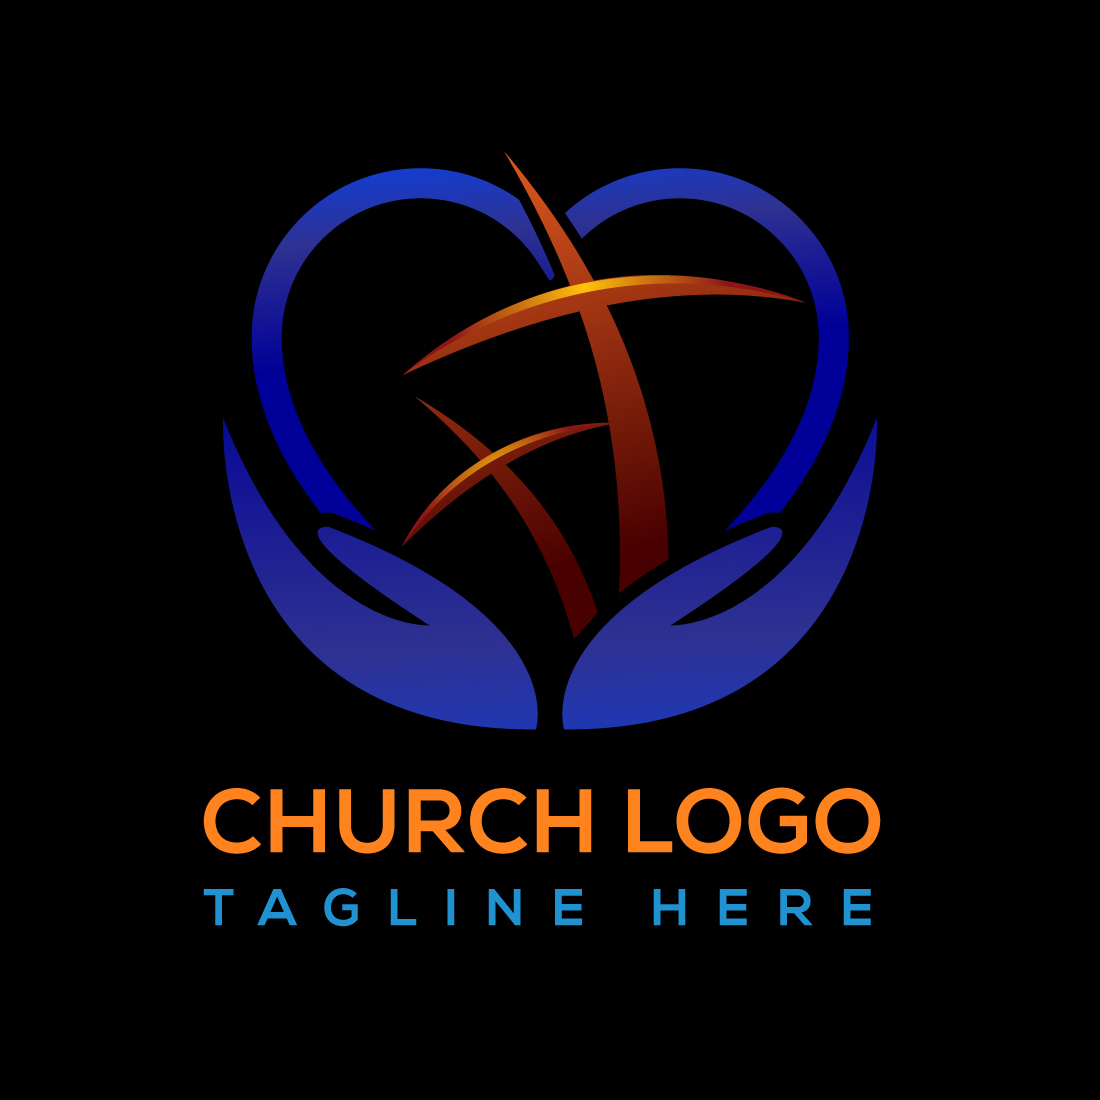 Church Logo Black Design Vector Illustration cover image.